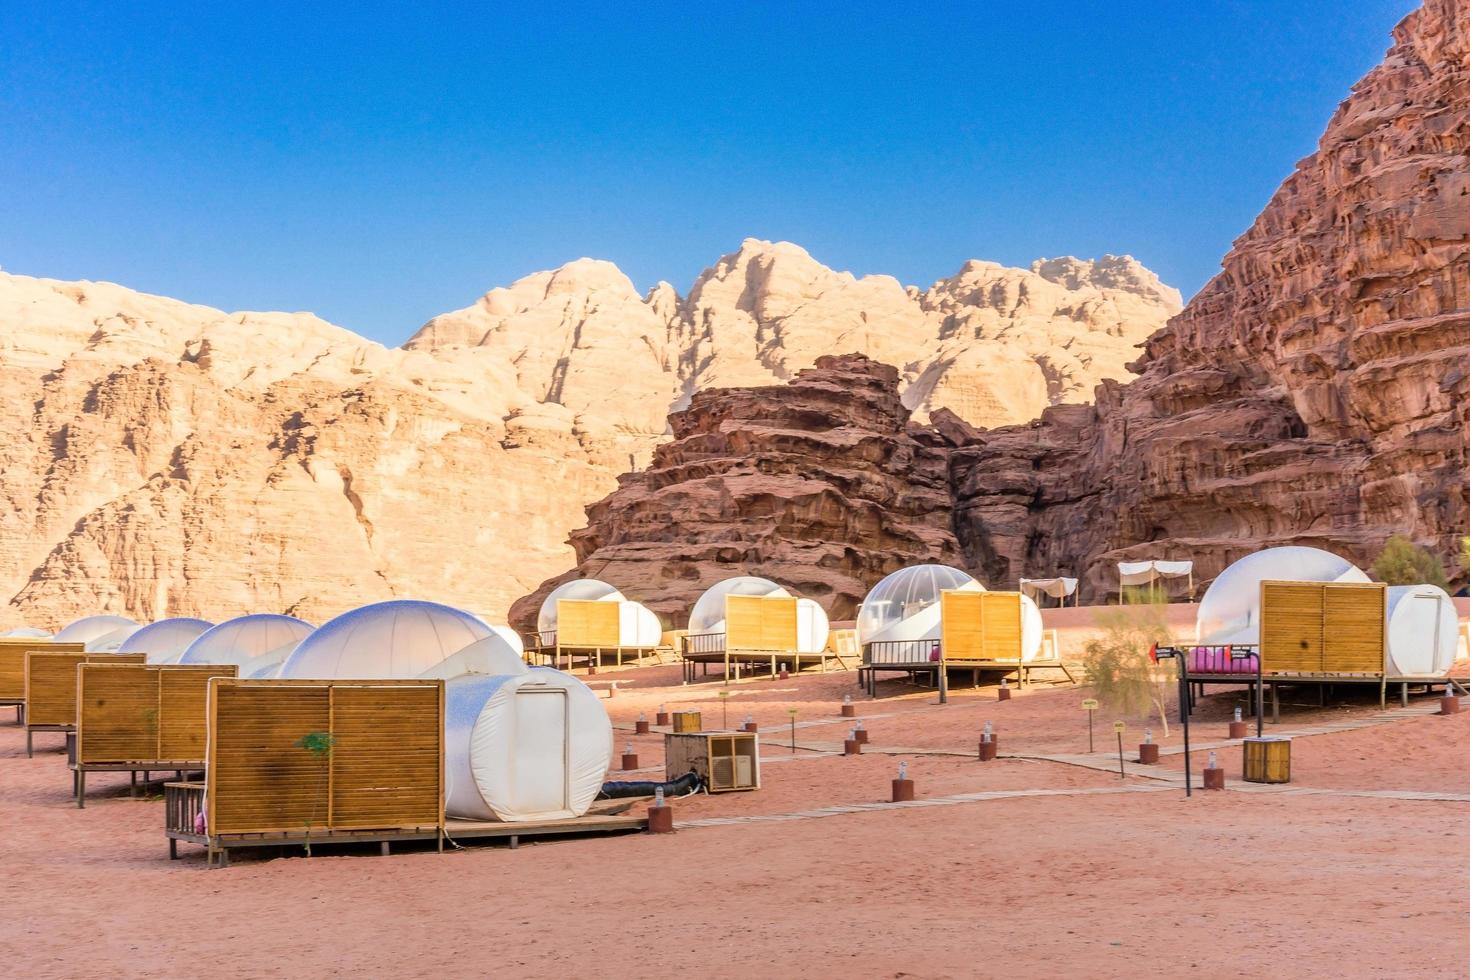 Camping along the rocks in Petra, Wadi Rum, Jordan photo